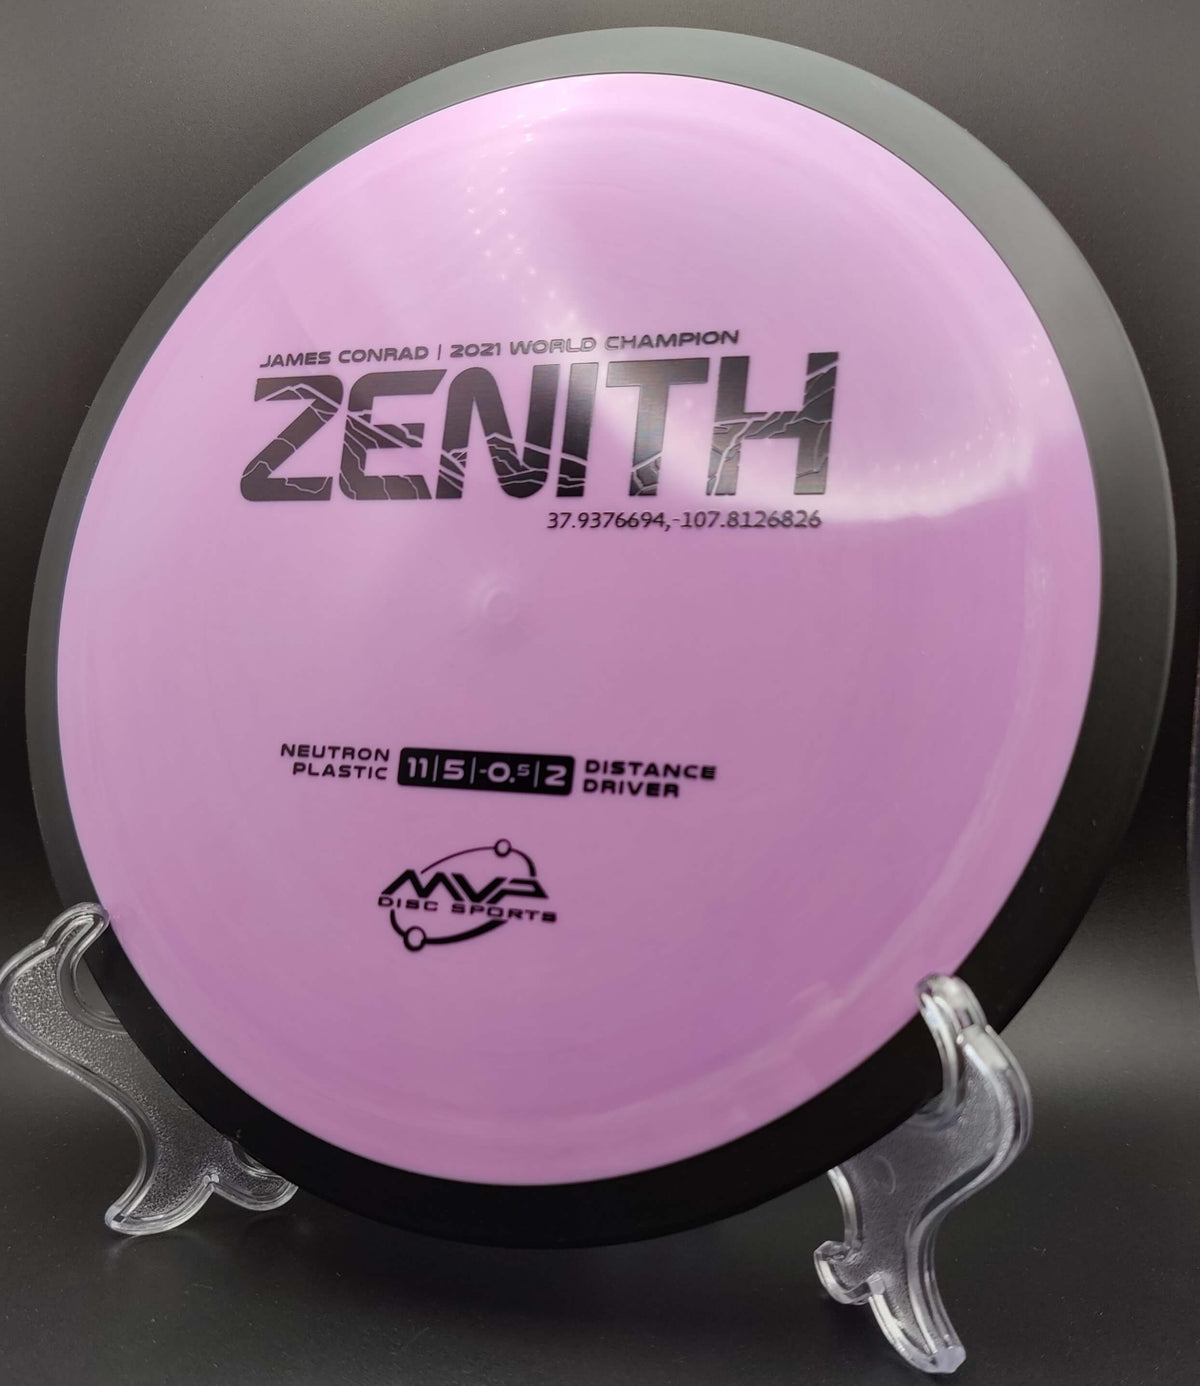 MVP Neutron Zenith - James Conrad 2021 World Champion